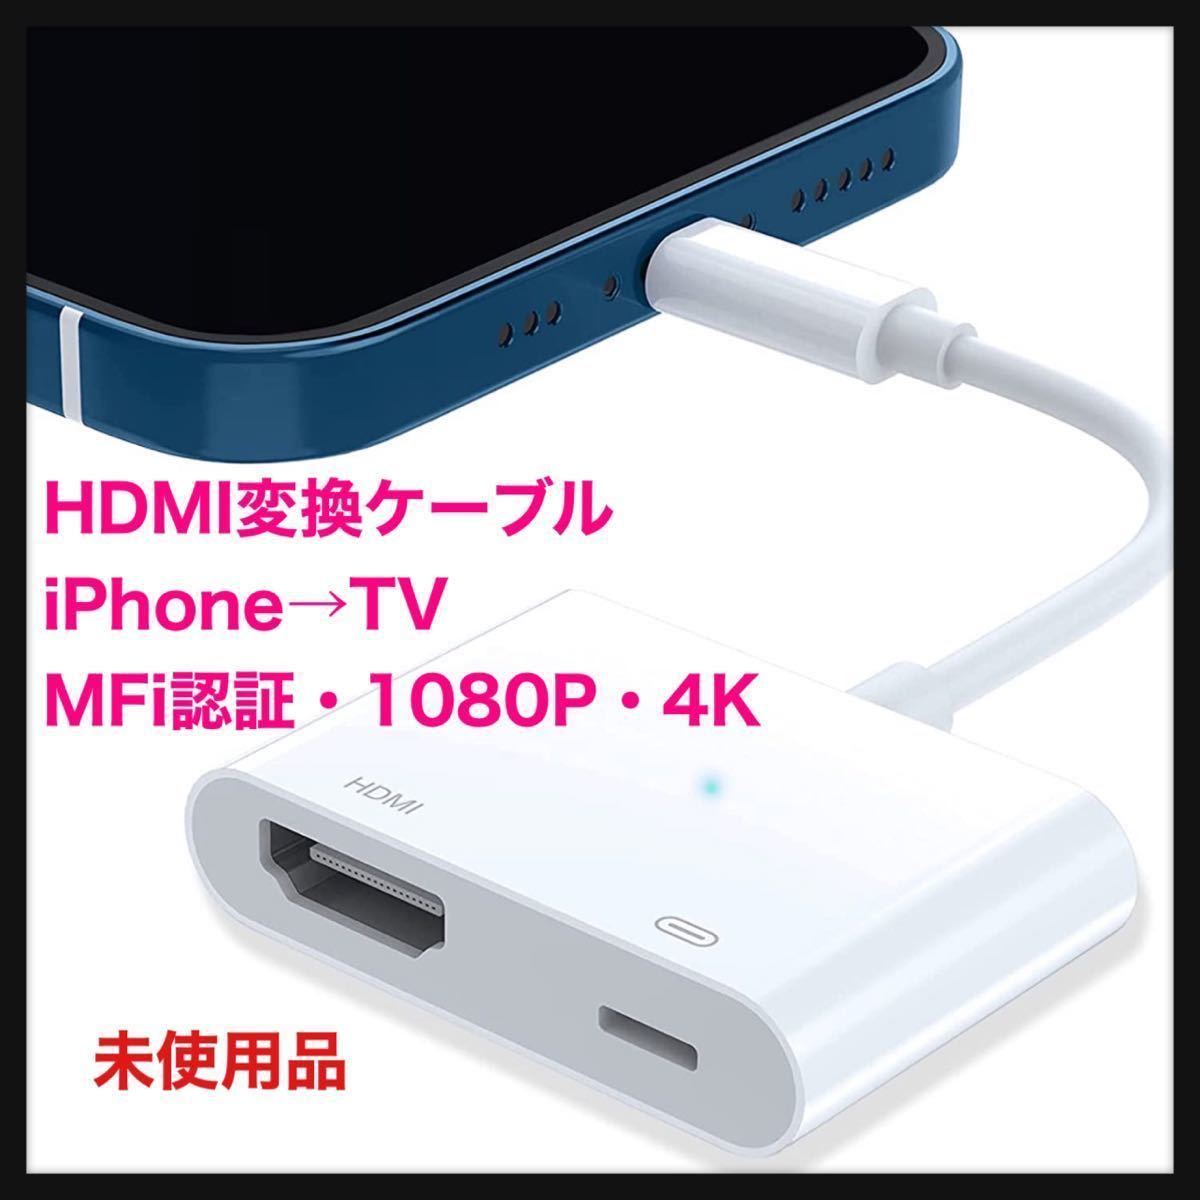 VideoPro ビデオプロ VPC-HS3 HDMI to SDI (コンバーター アップ 